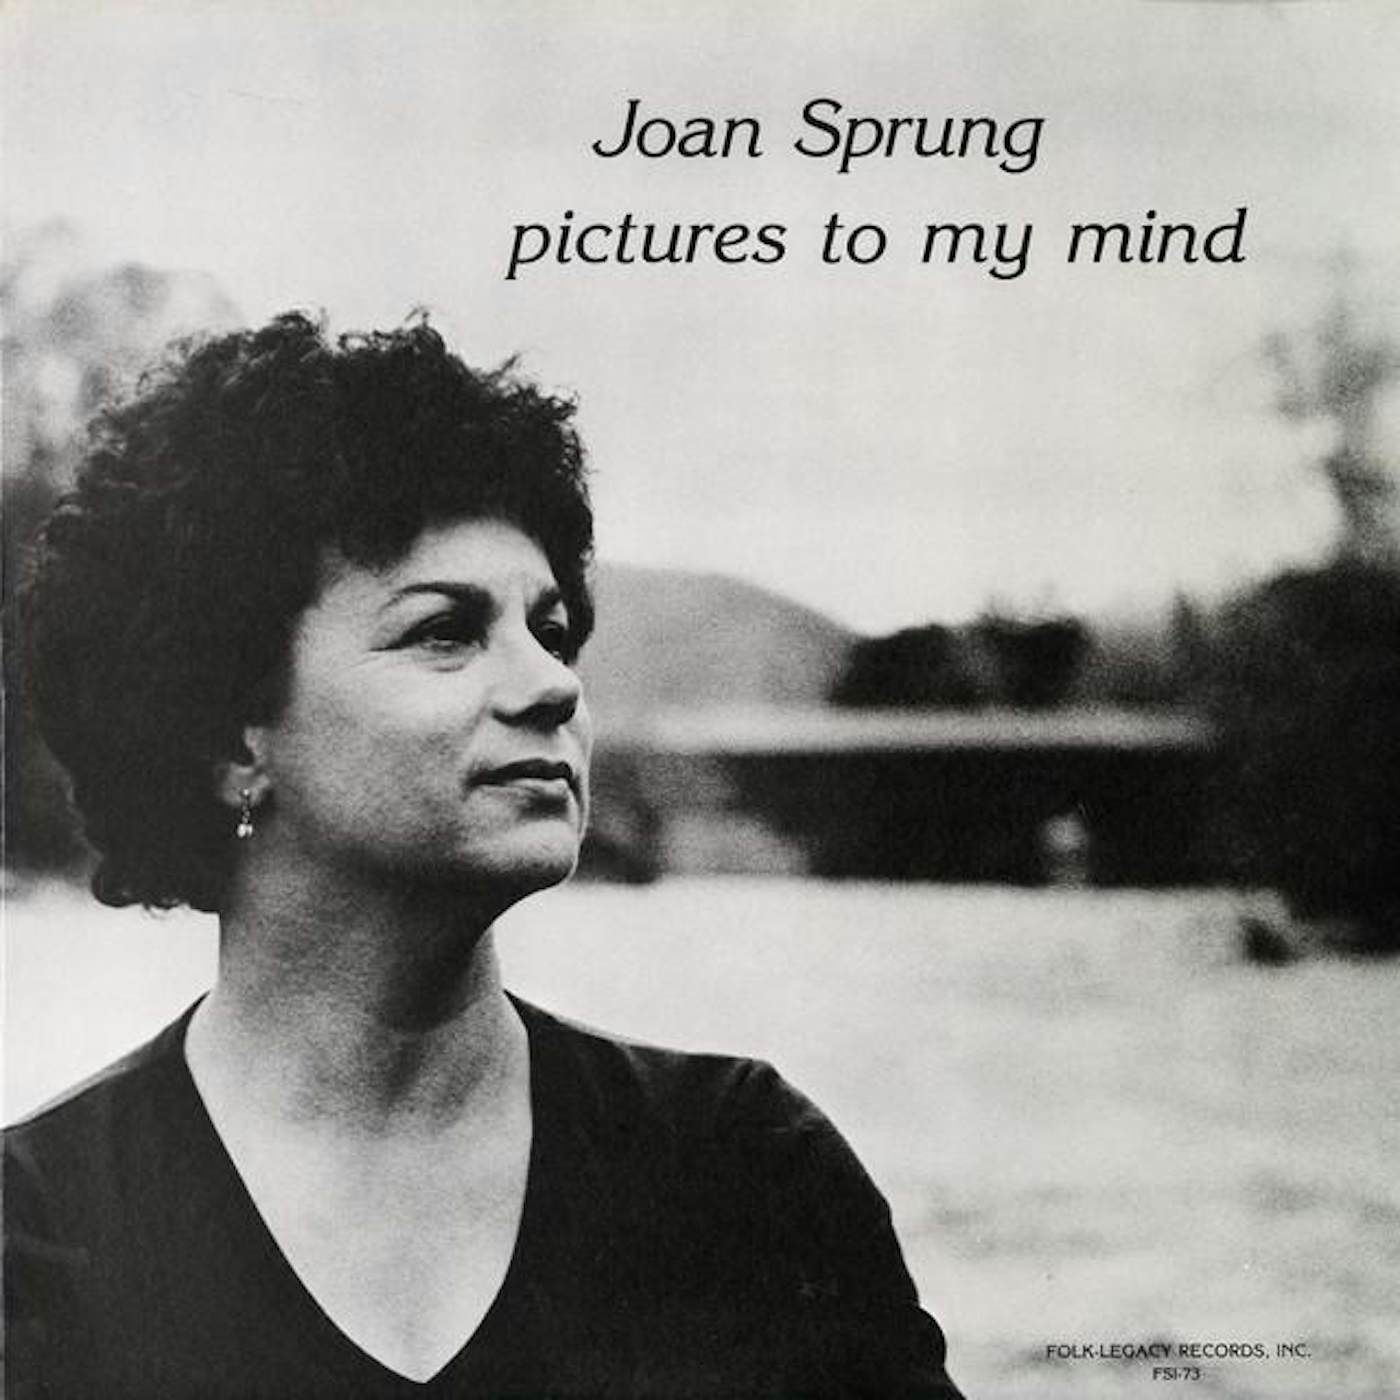 Joan Sprung